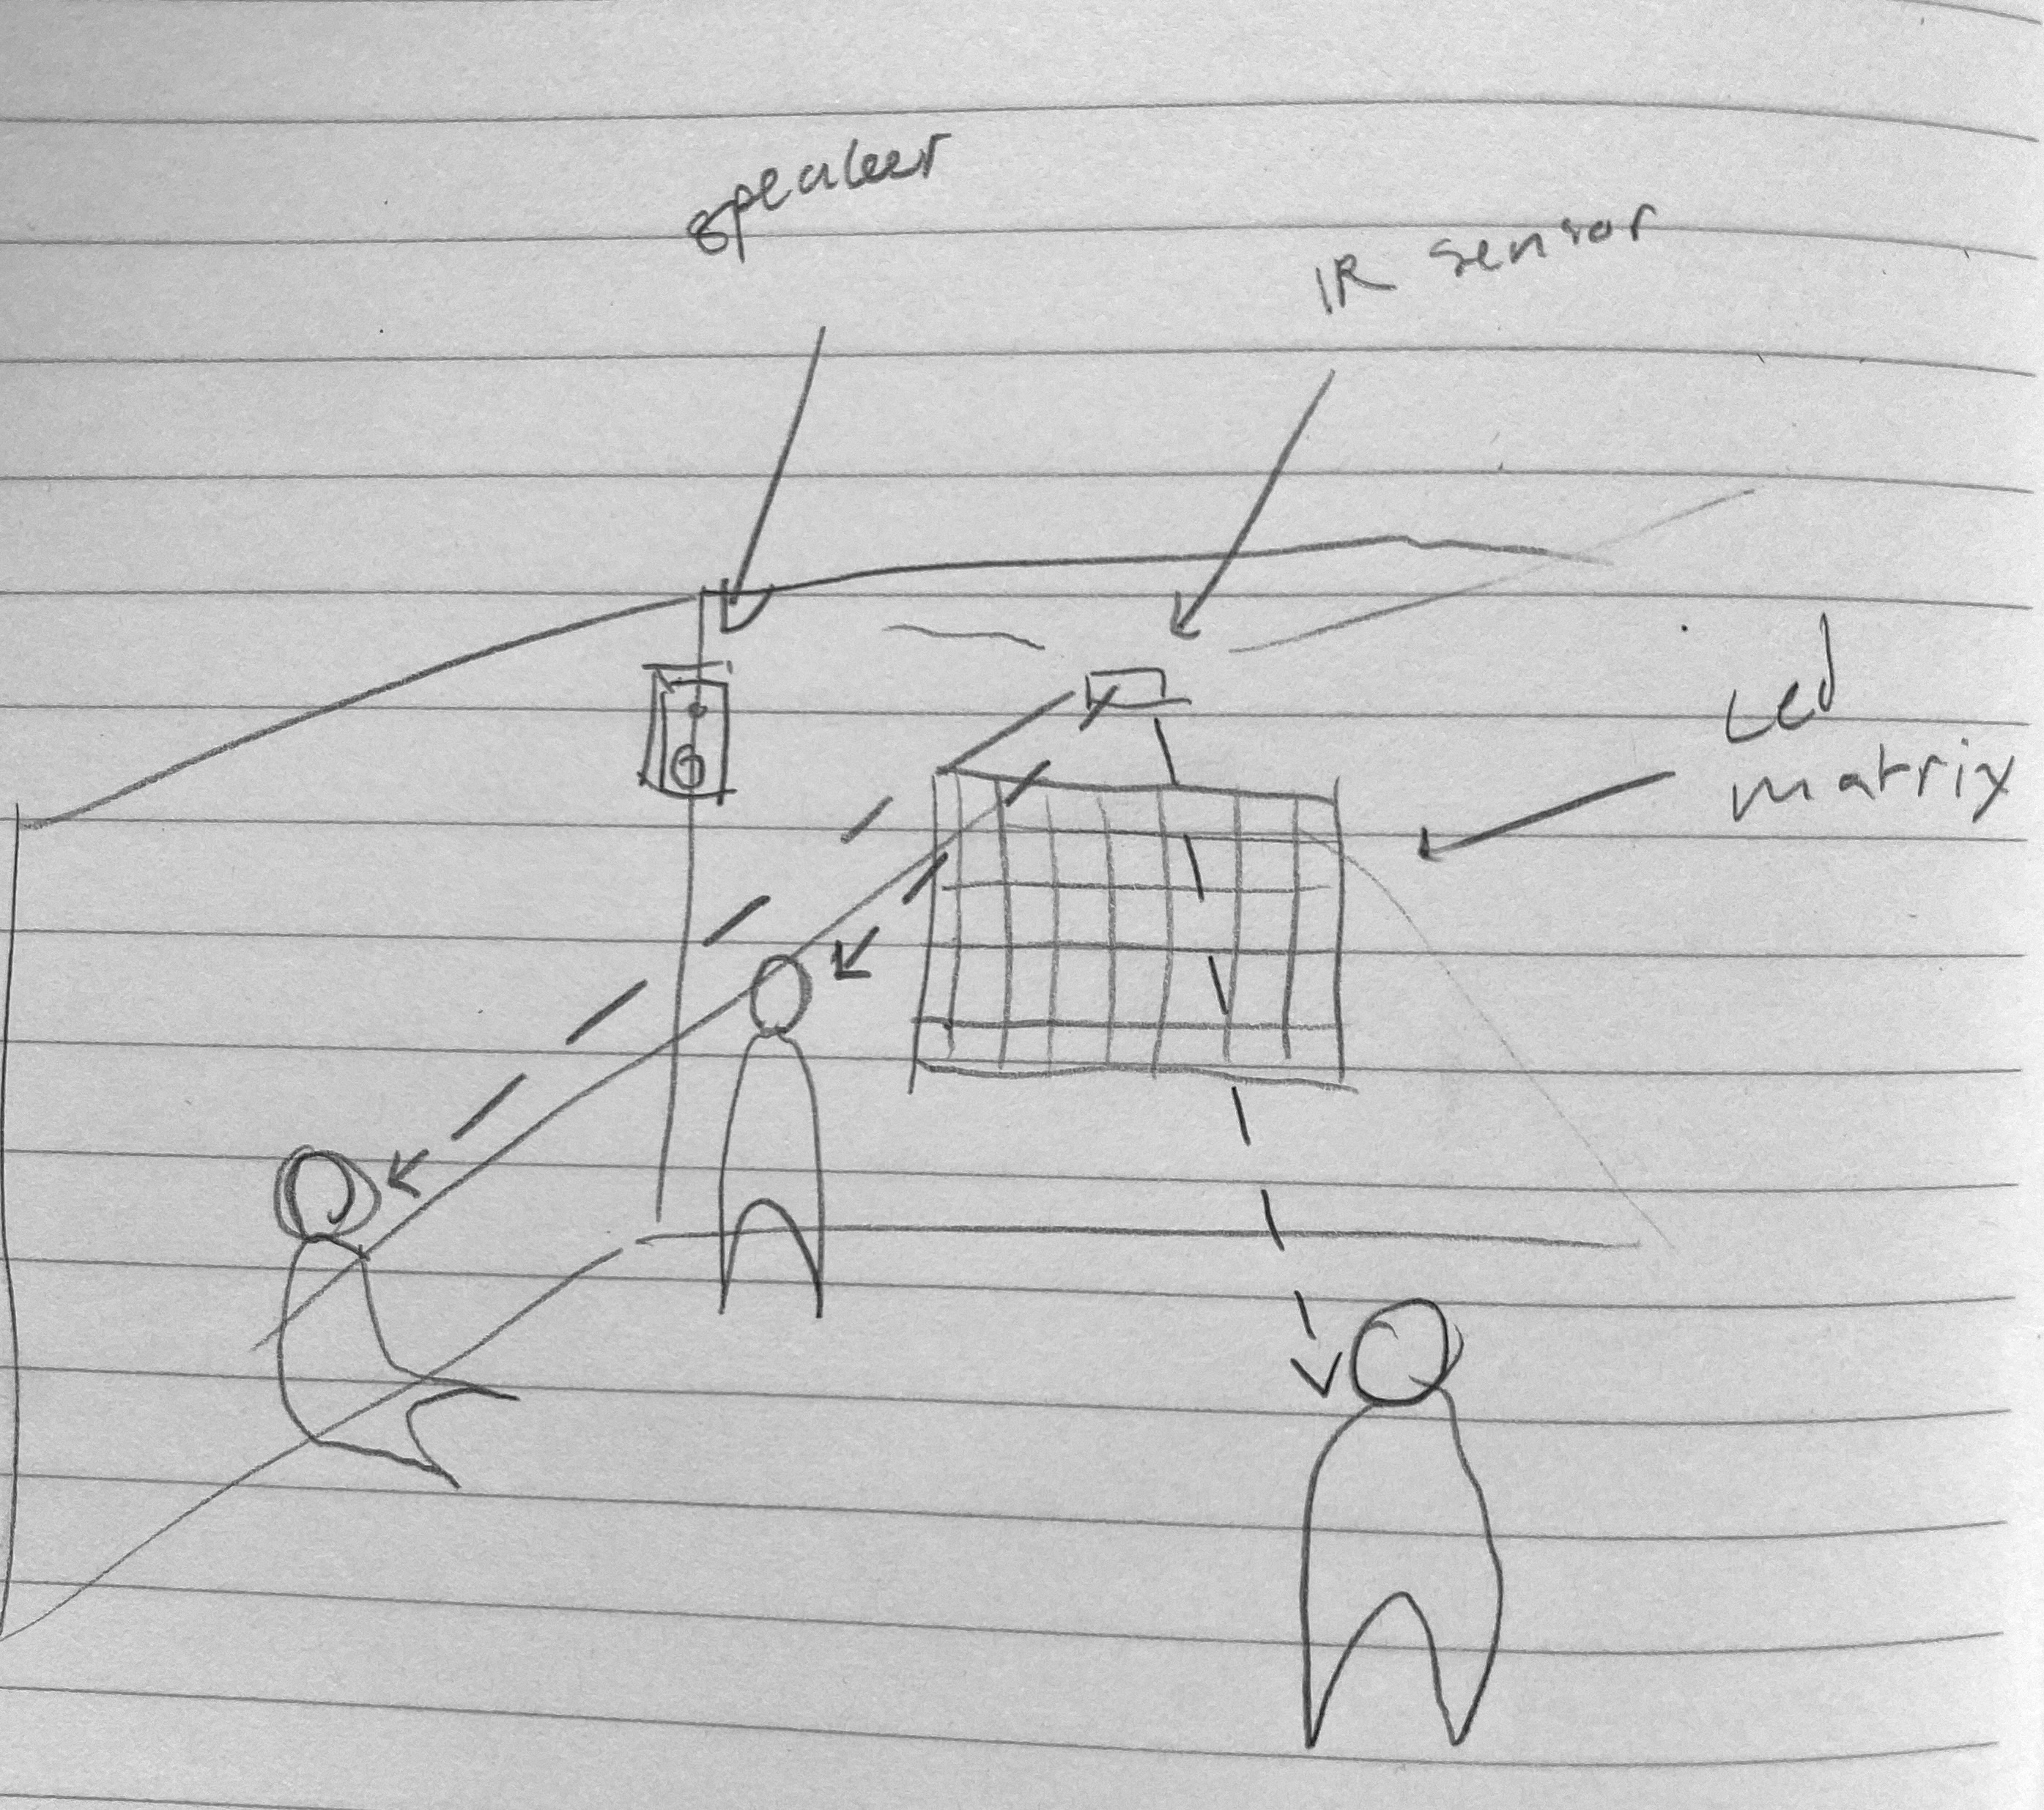 Sketch of the Idea